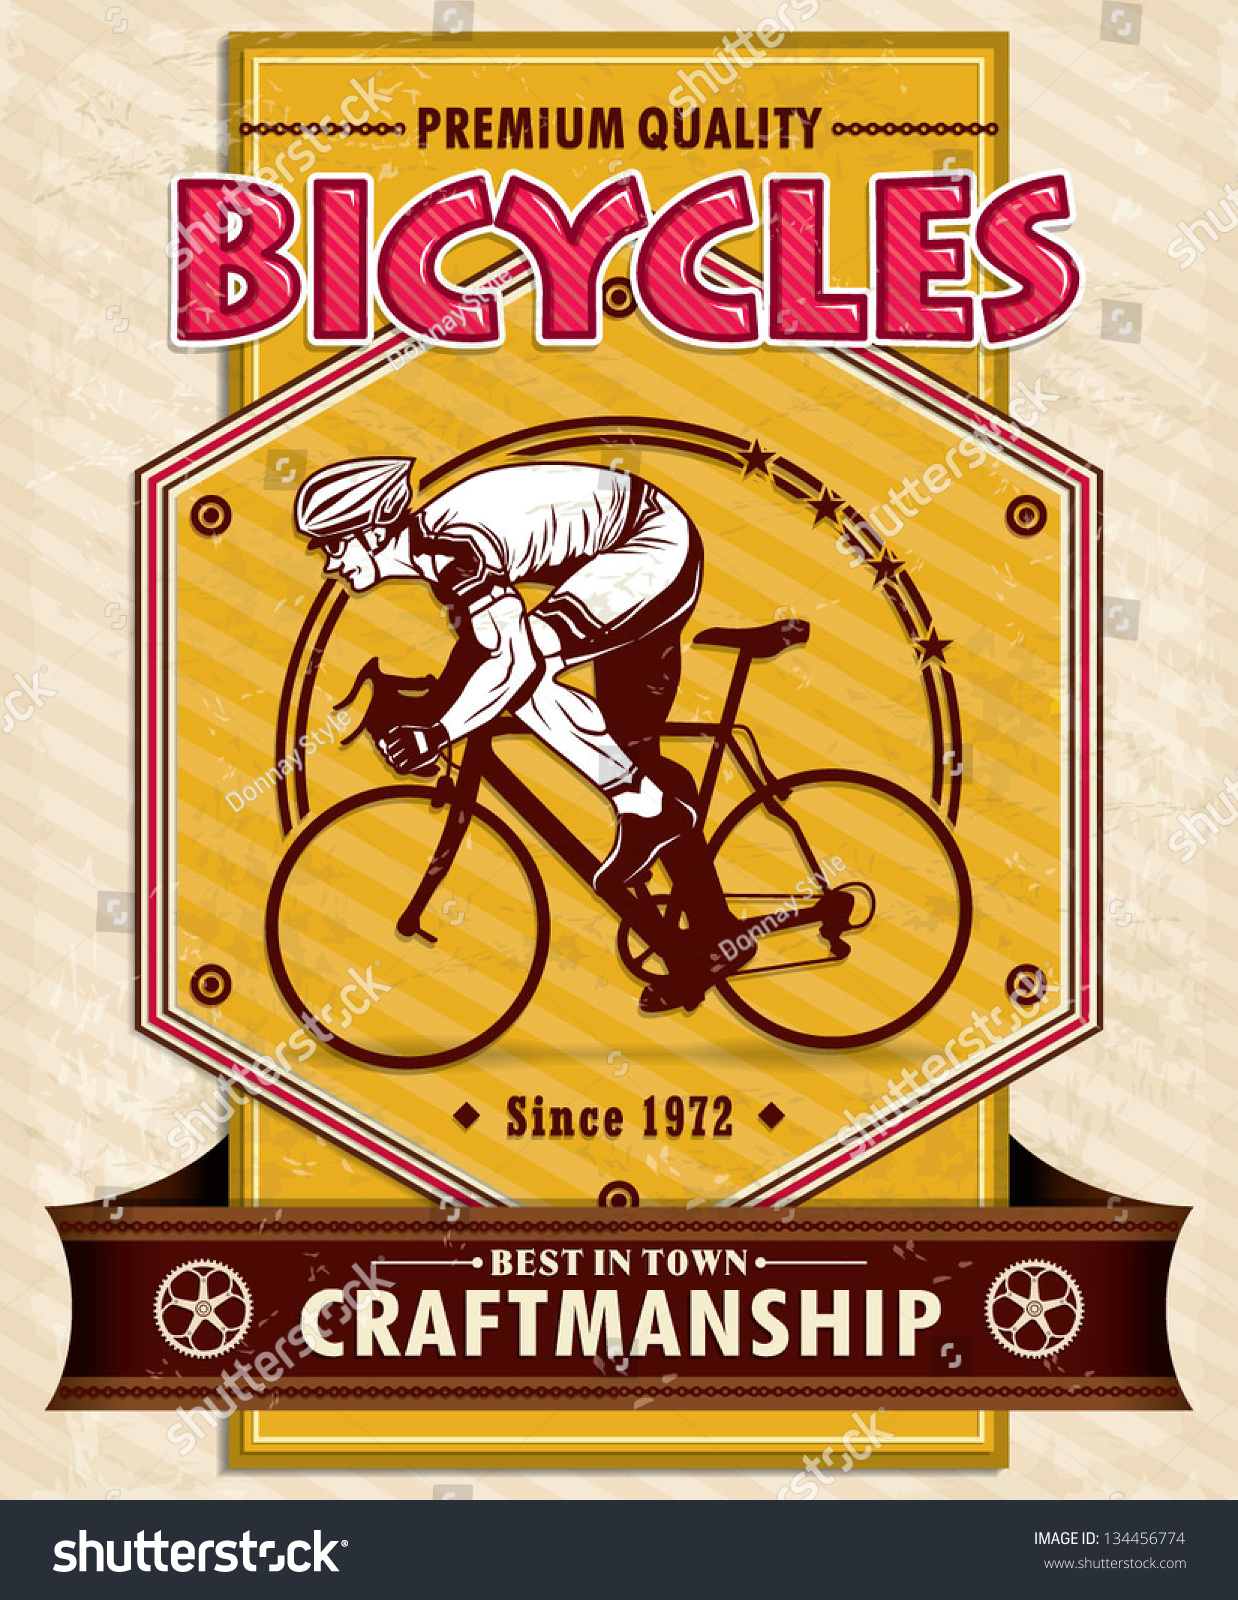 Vintage Bicycle Poster Design Stock Vector Illustration 134456774 ...